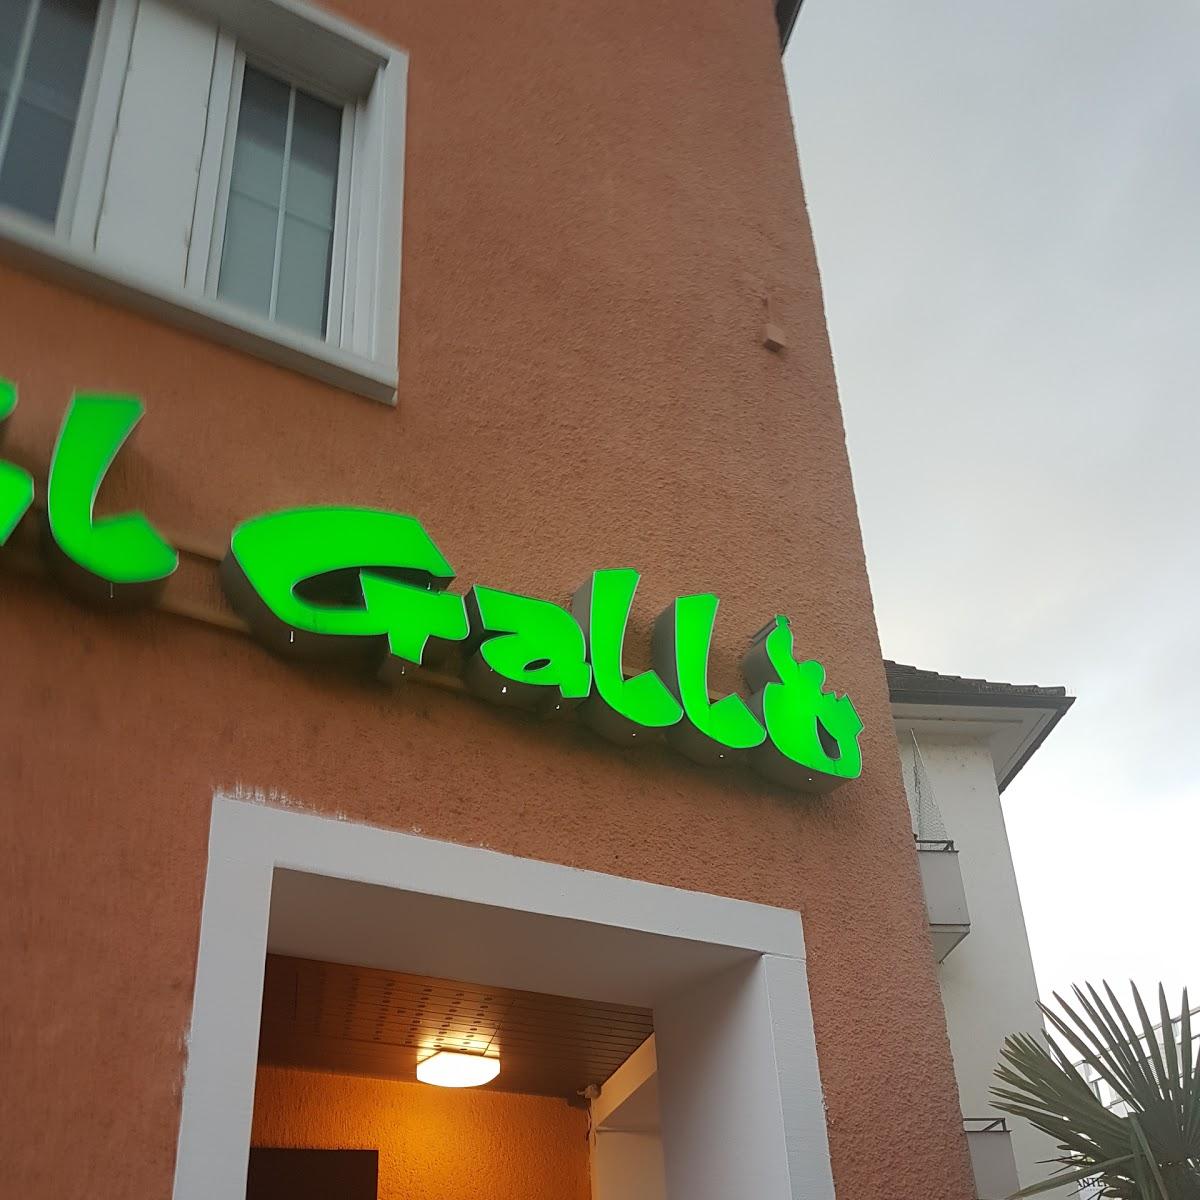 Restaurant "El Gallo Freiburg" in Freiburg im Breisgau